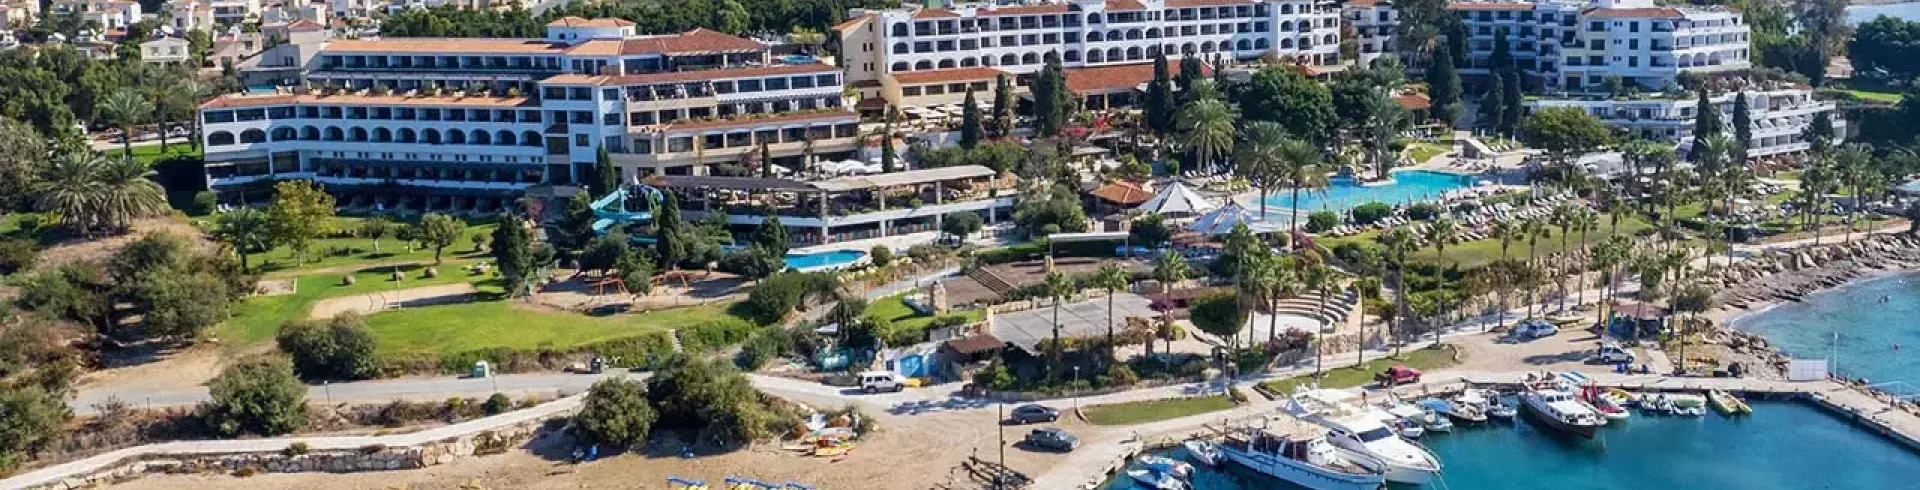 Hotel Coral Beach & Resort